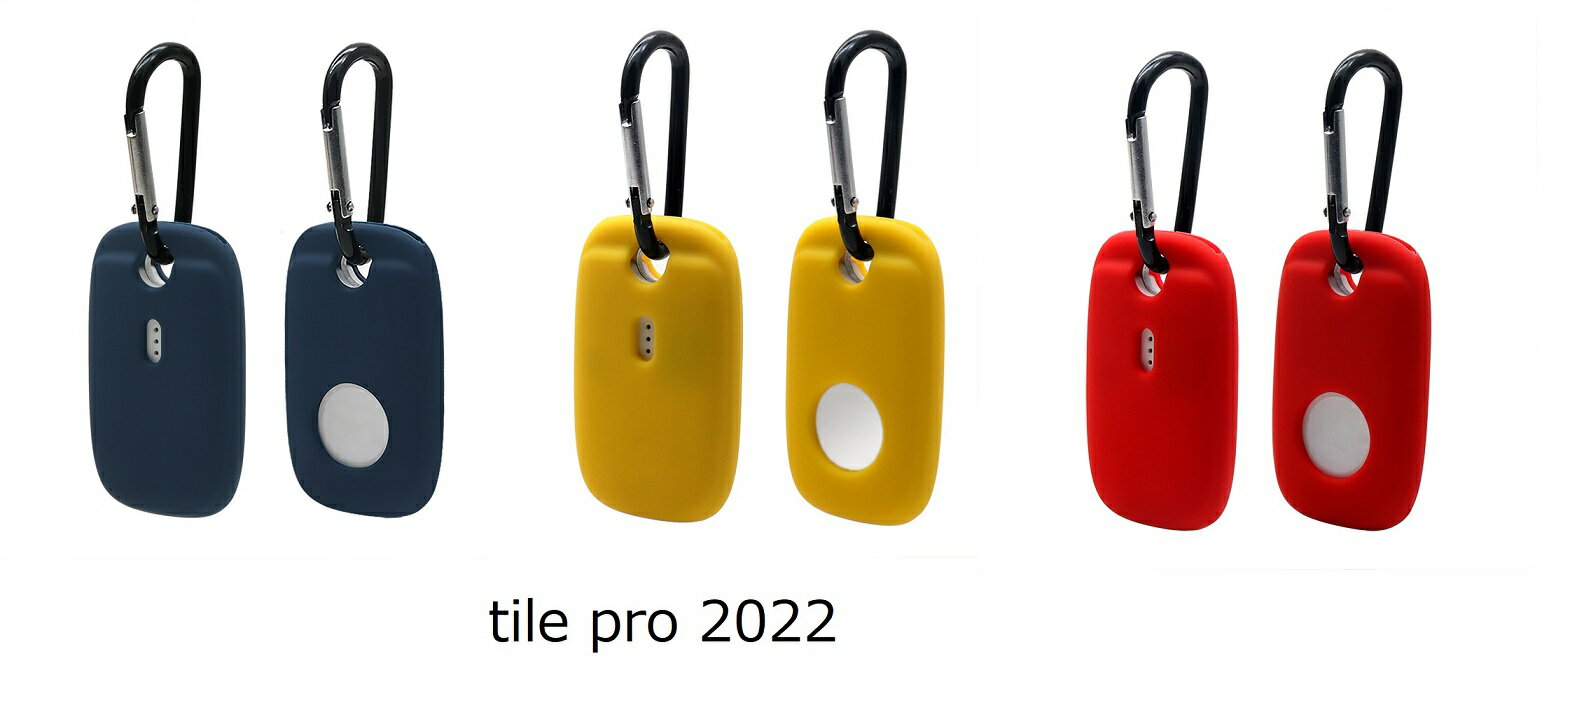 Tile Mate 2022 / Tile pro 2022 ケース シリコン ソフト シンプル シリコン材質 擦り傷防止 紛失防止 軽量 薄型 防衝撃 Tile Mate 2022 保護カバー バンパー 3